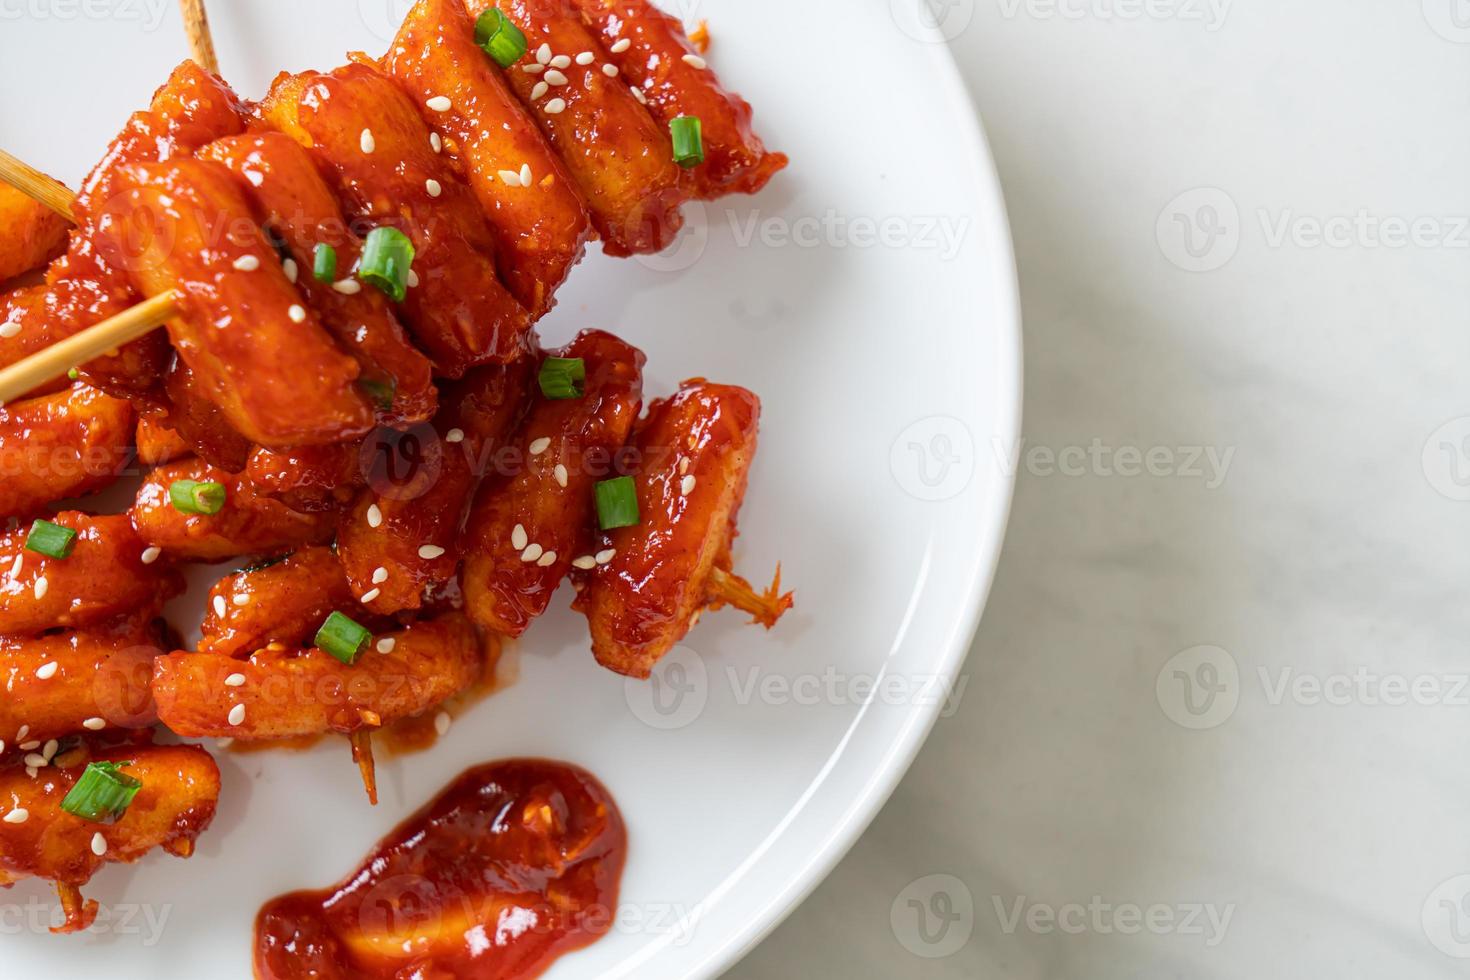 Deep-fried Korean rice cake, or Tteokbokki, skewered with spicy sauce - Korean food style photo